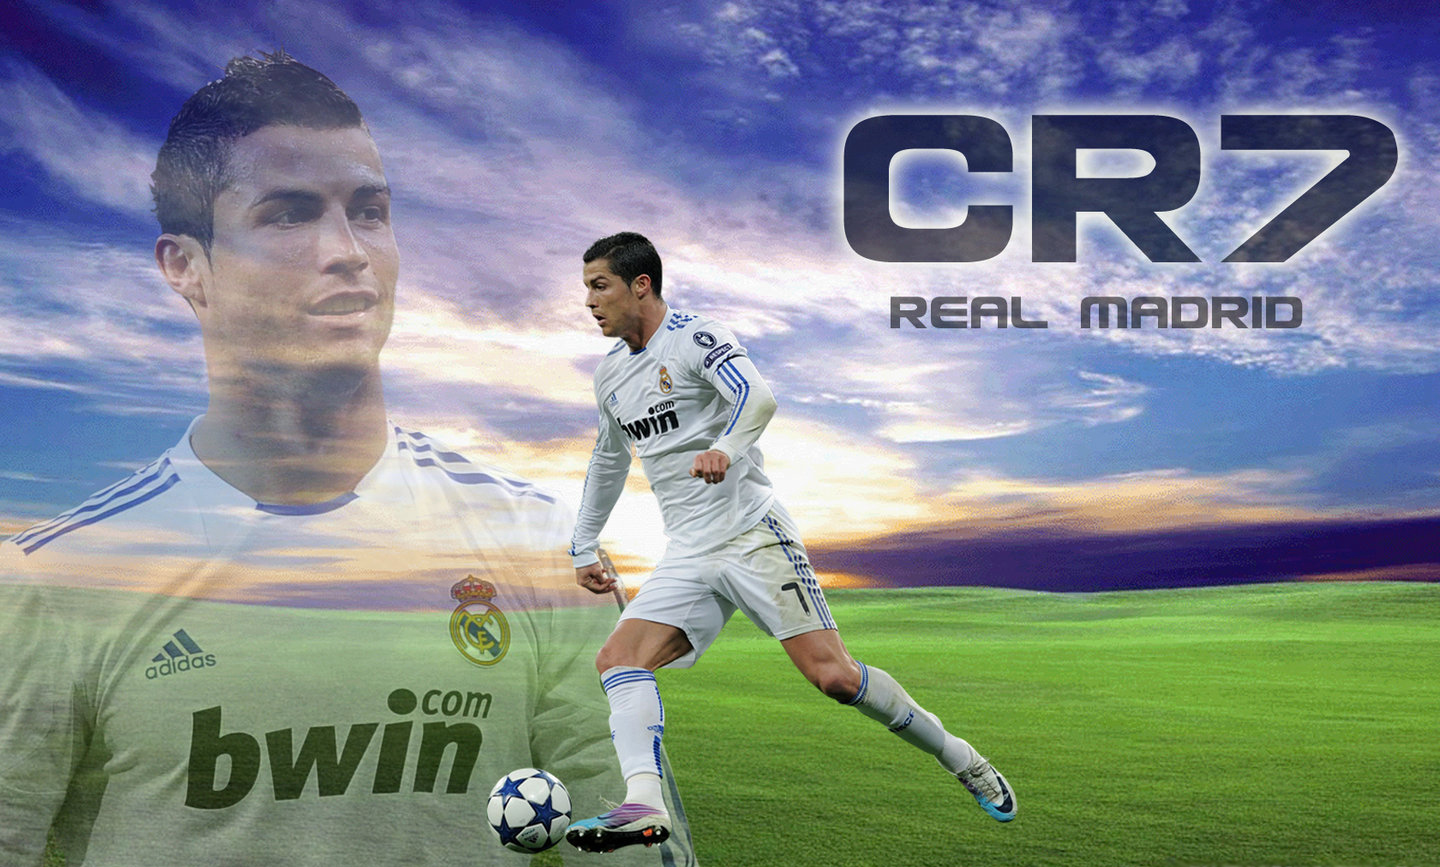 Player Stars Wallpaper Cristiano Ronaldo In Real Madrid